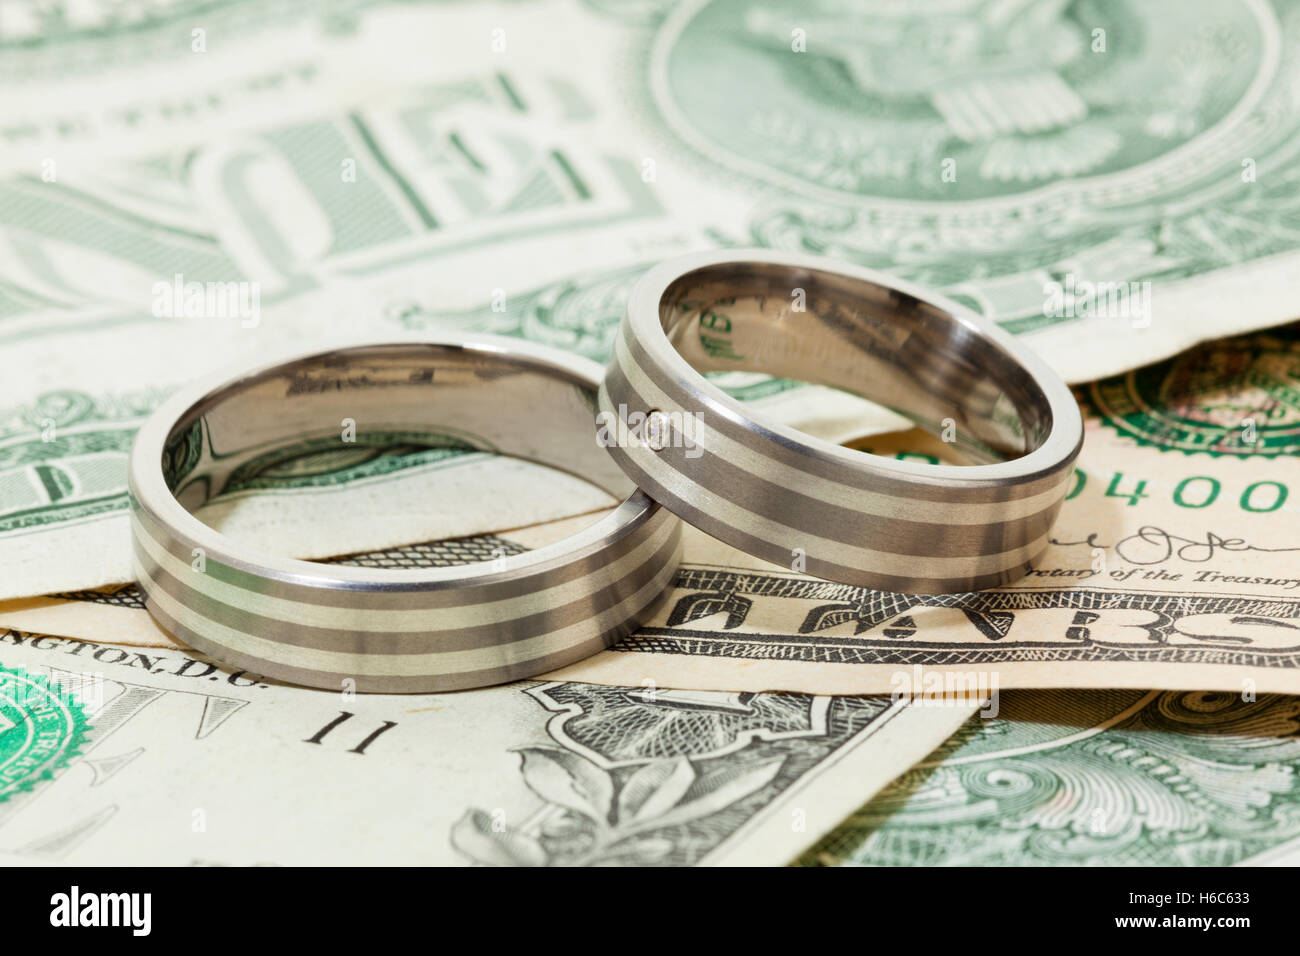 Par de anillos de compromiso o boda en billetes de dólar Foto de stock